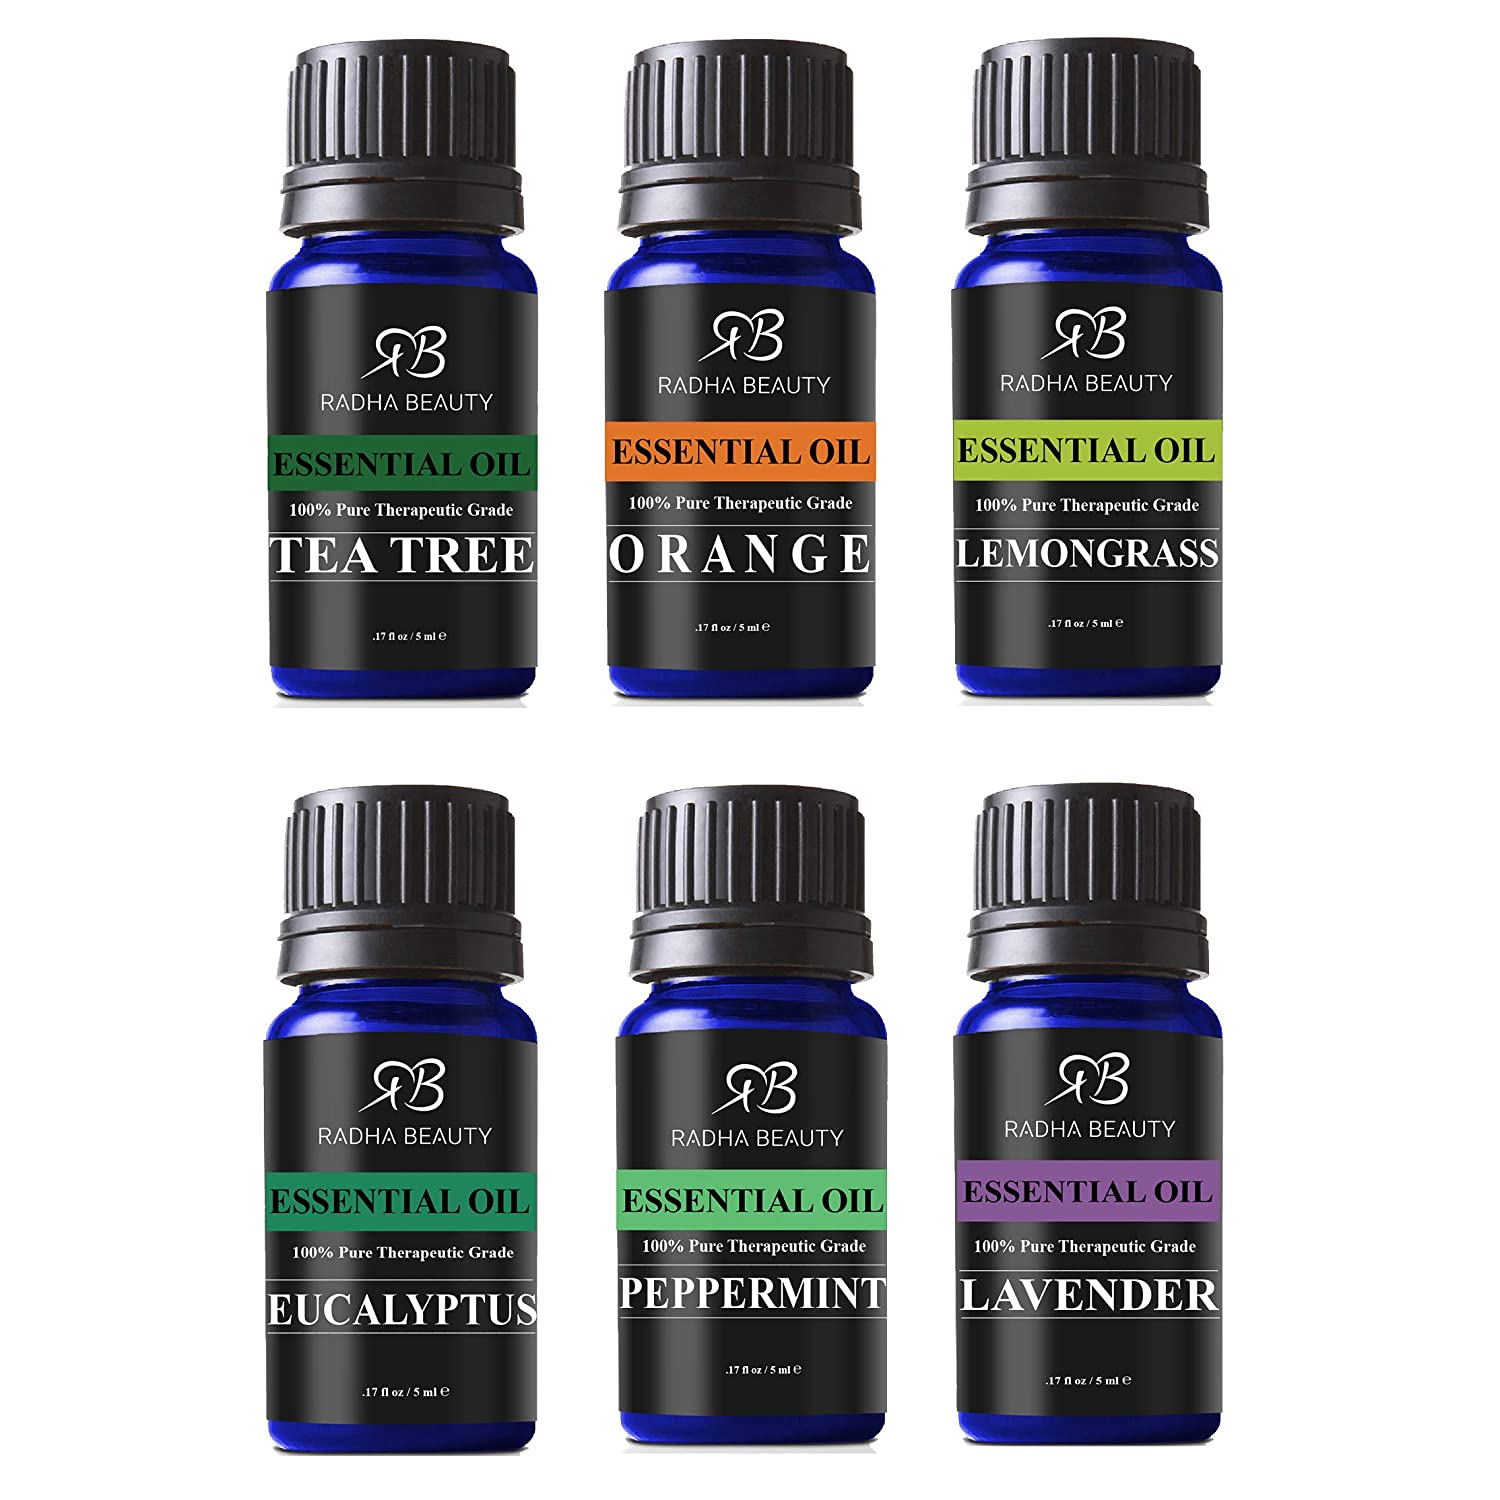 Aromatherapy Essential Oil Kit - 6 Essential Oils Set 5ml - Buy Online